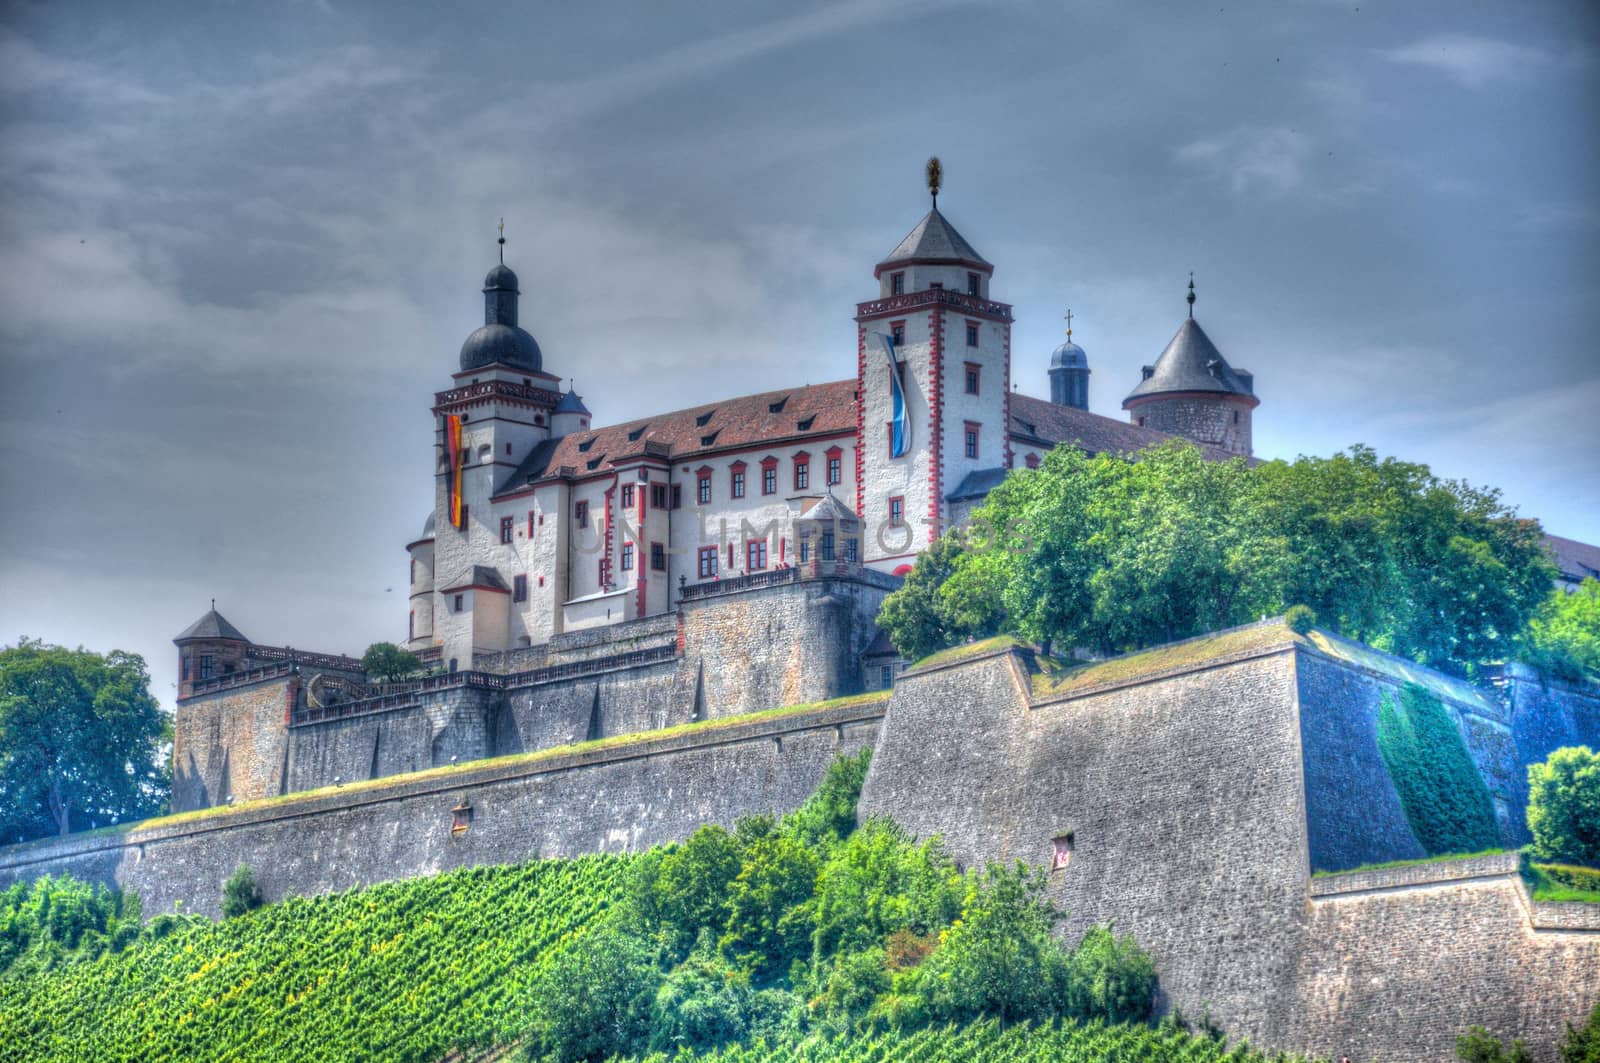 Marienberg Fortress (Castle), Wurzburg, Bayern, Germany by Eagle2308